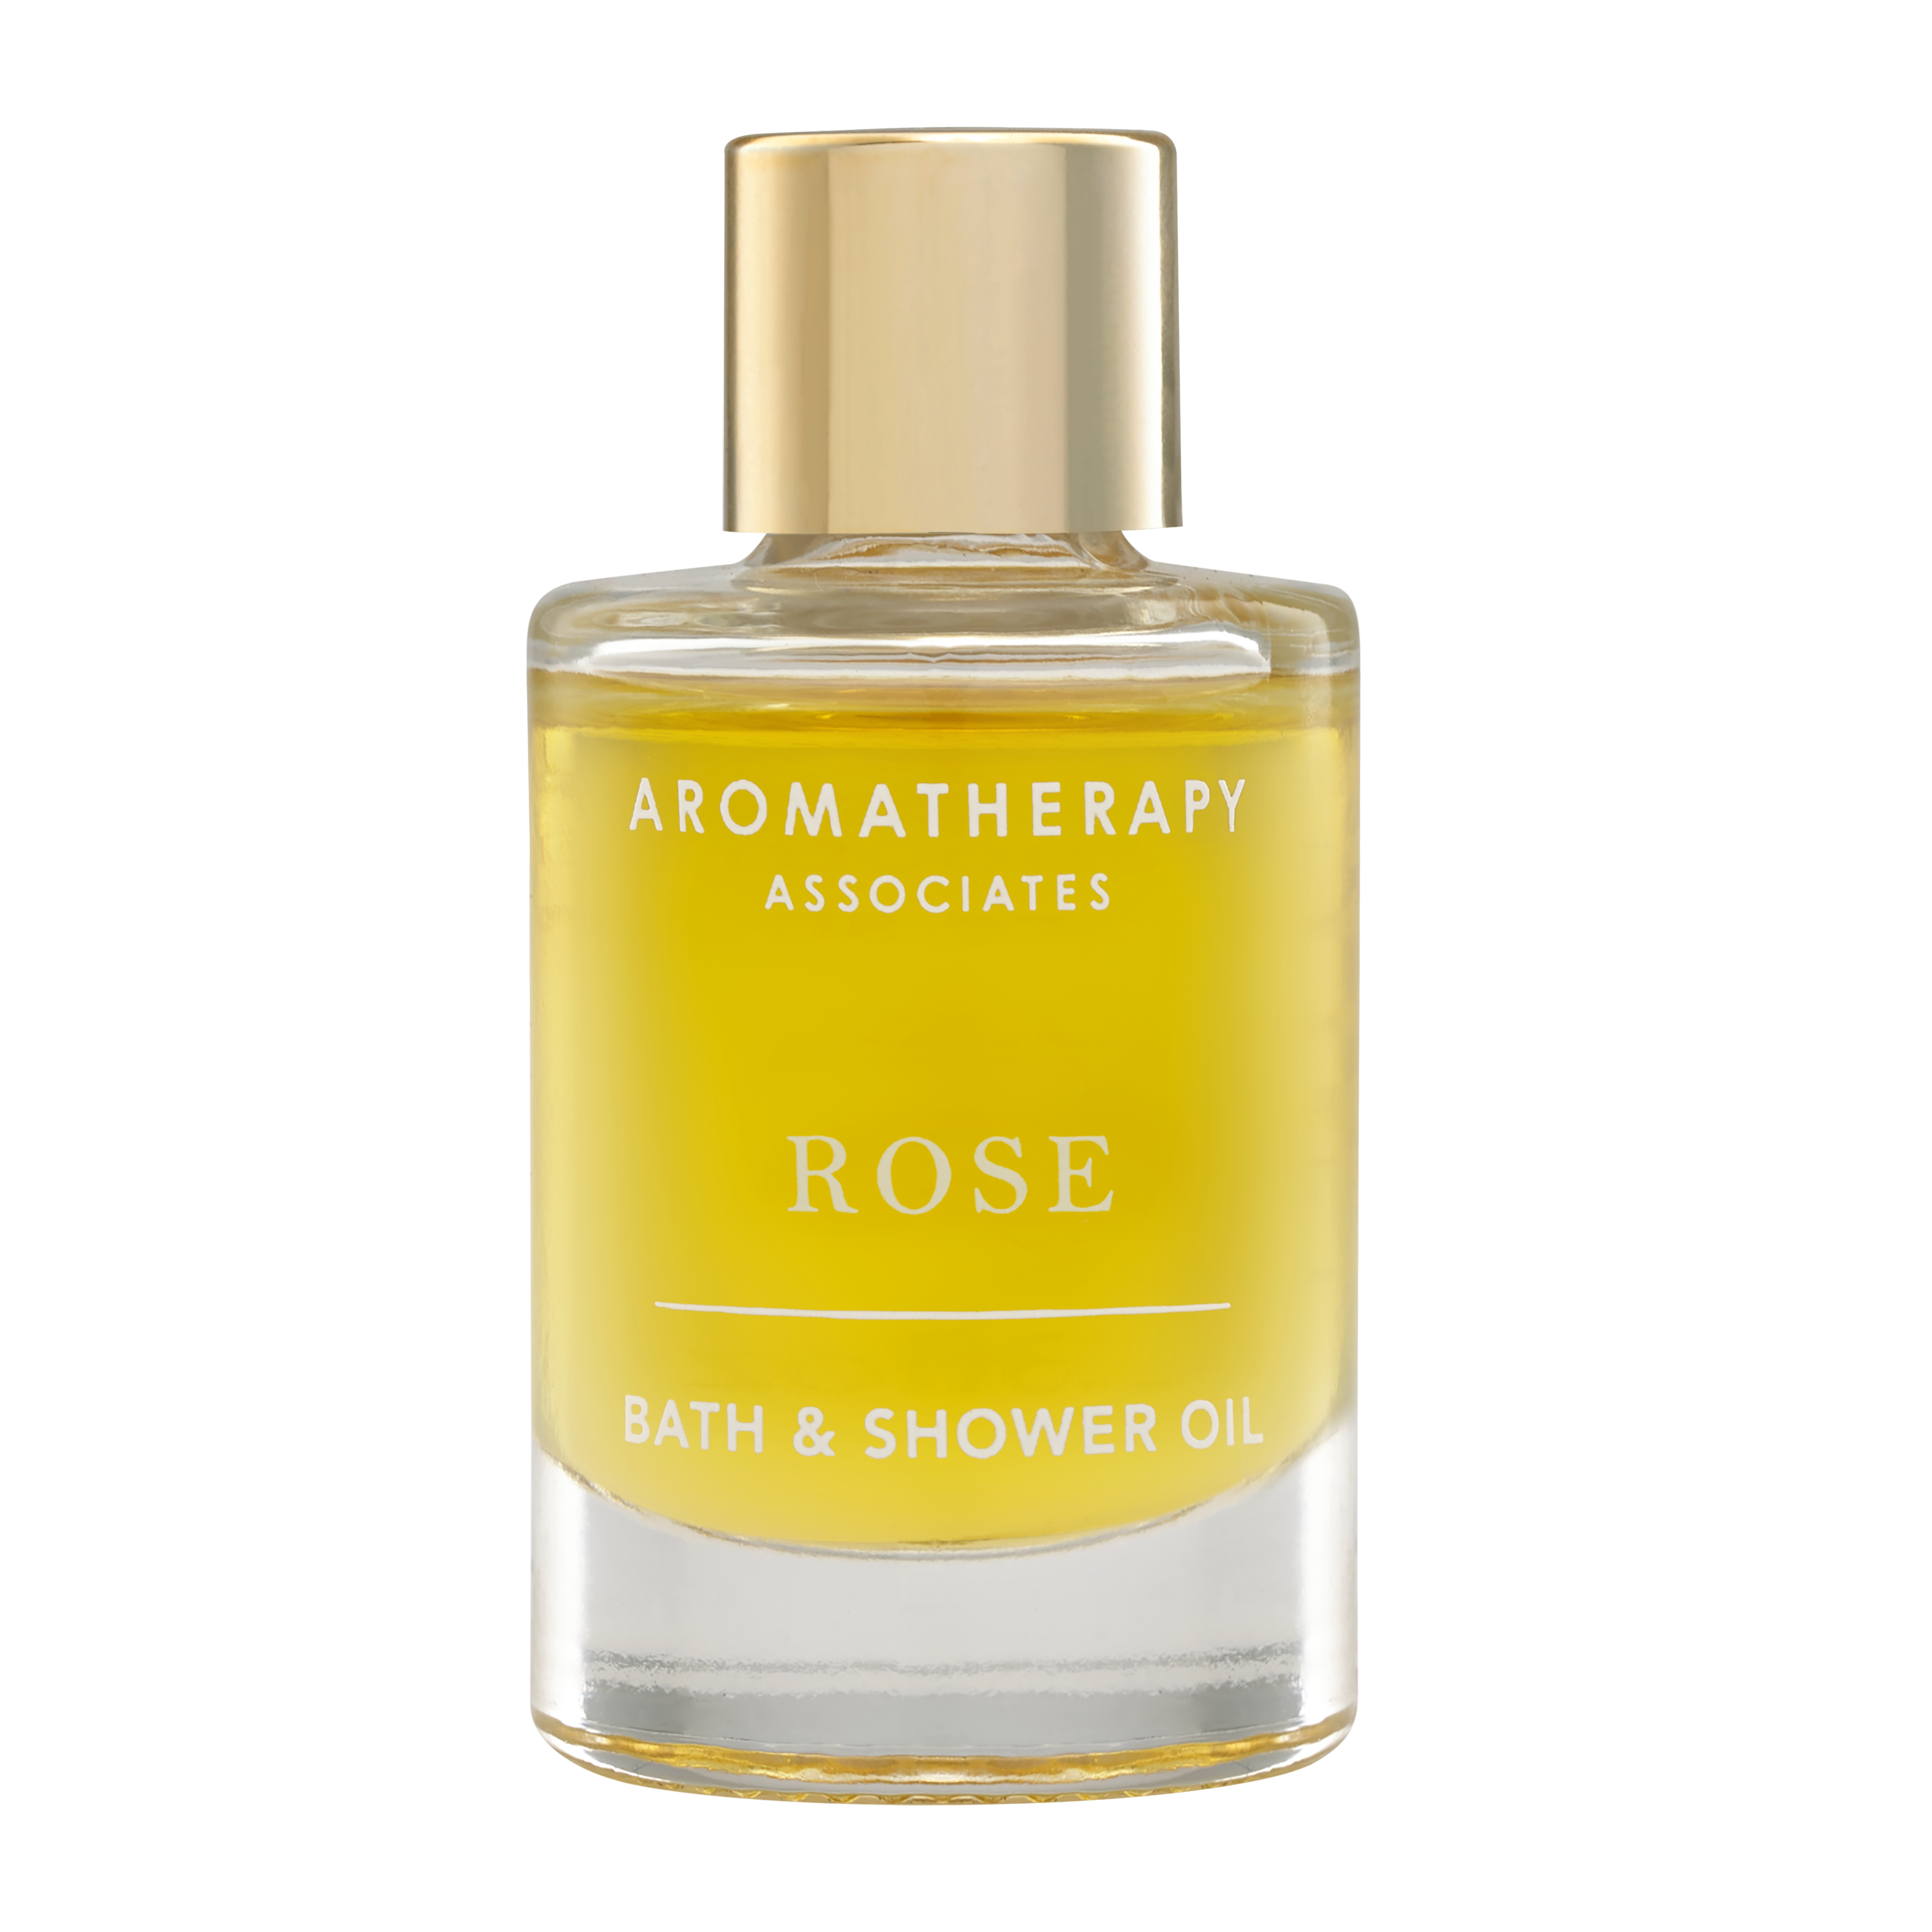 Rose Bath & Shower Oil 9ml Aromatherapy Associates